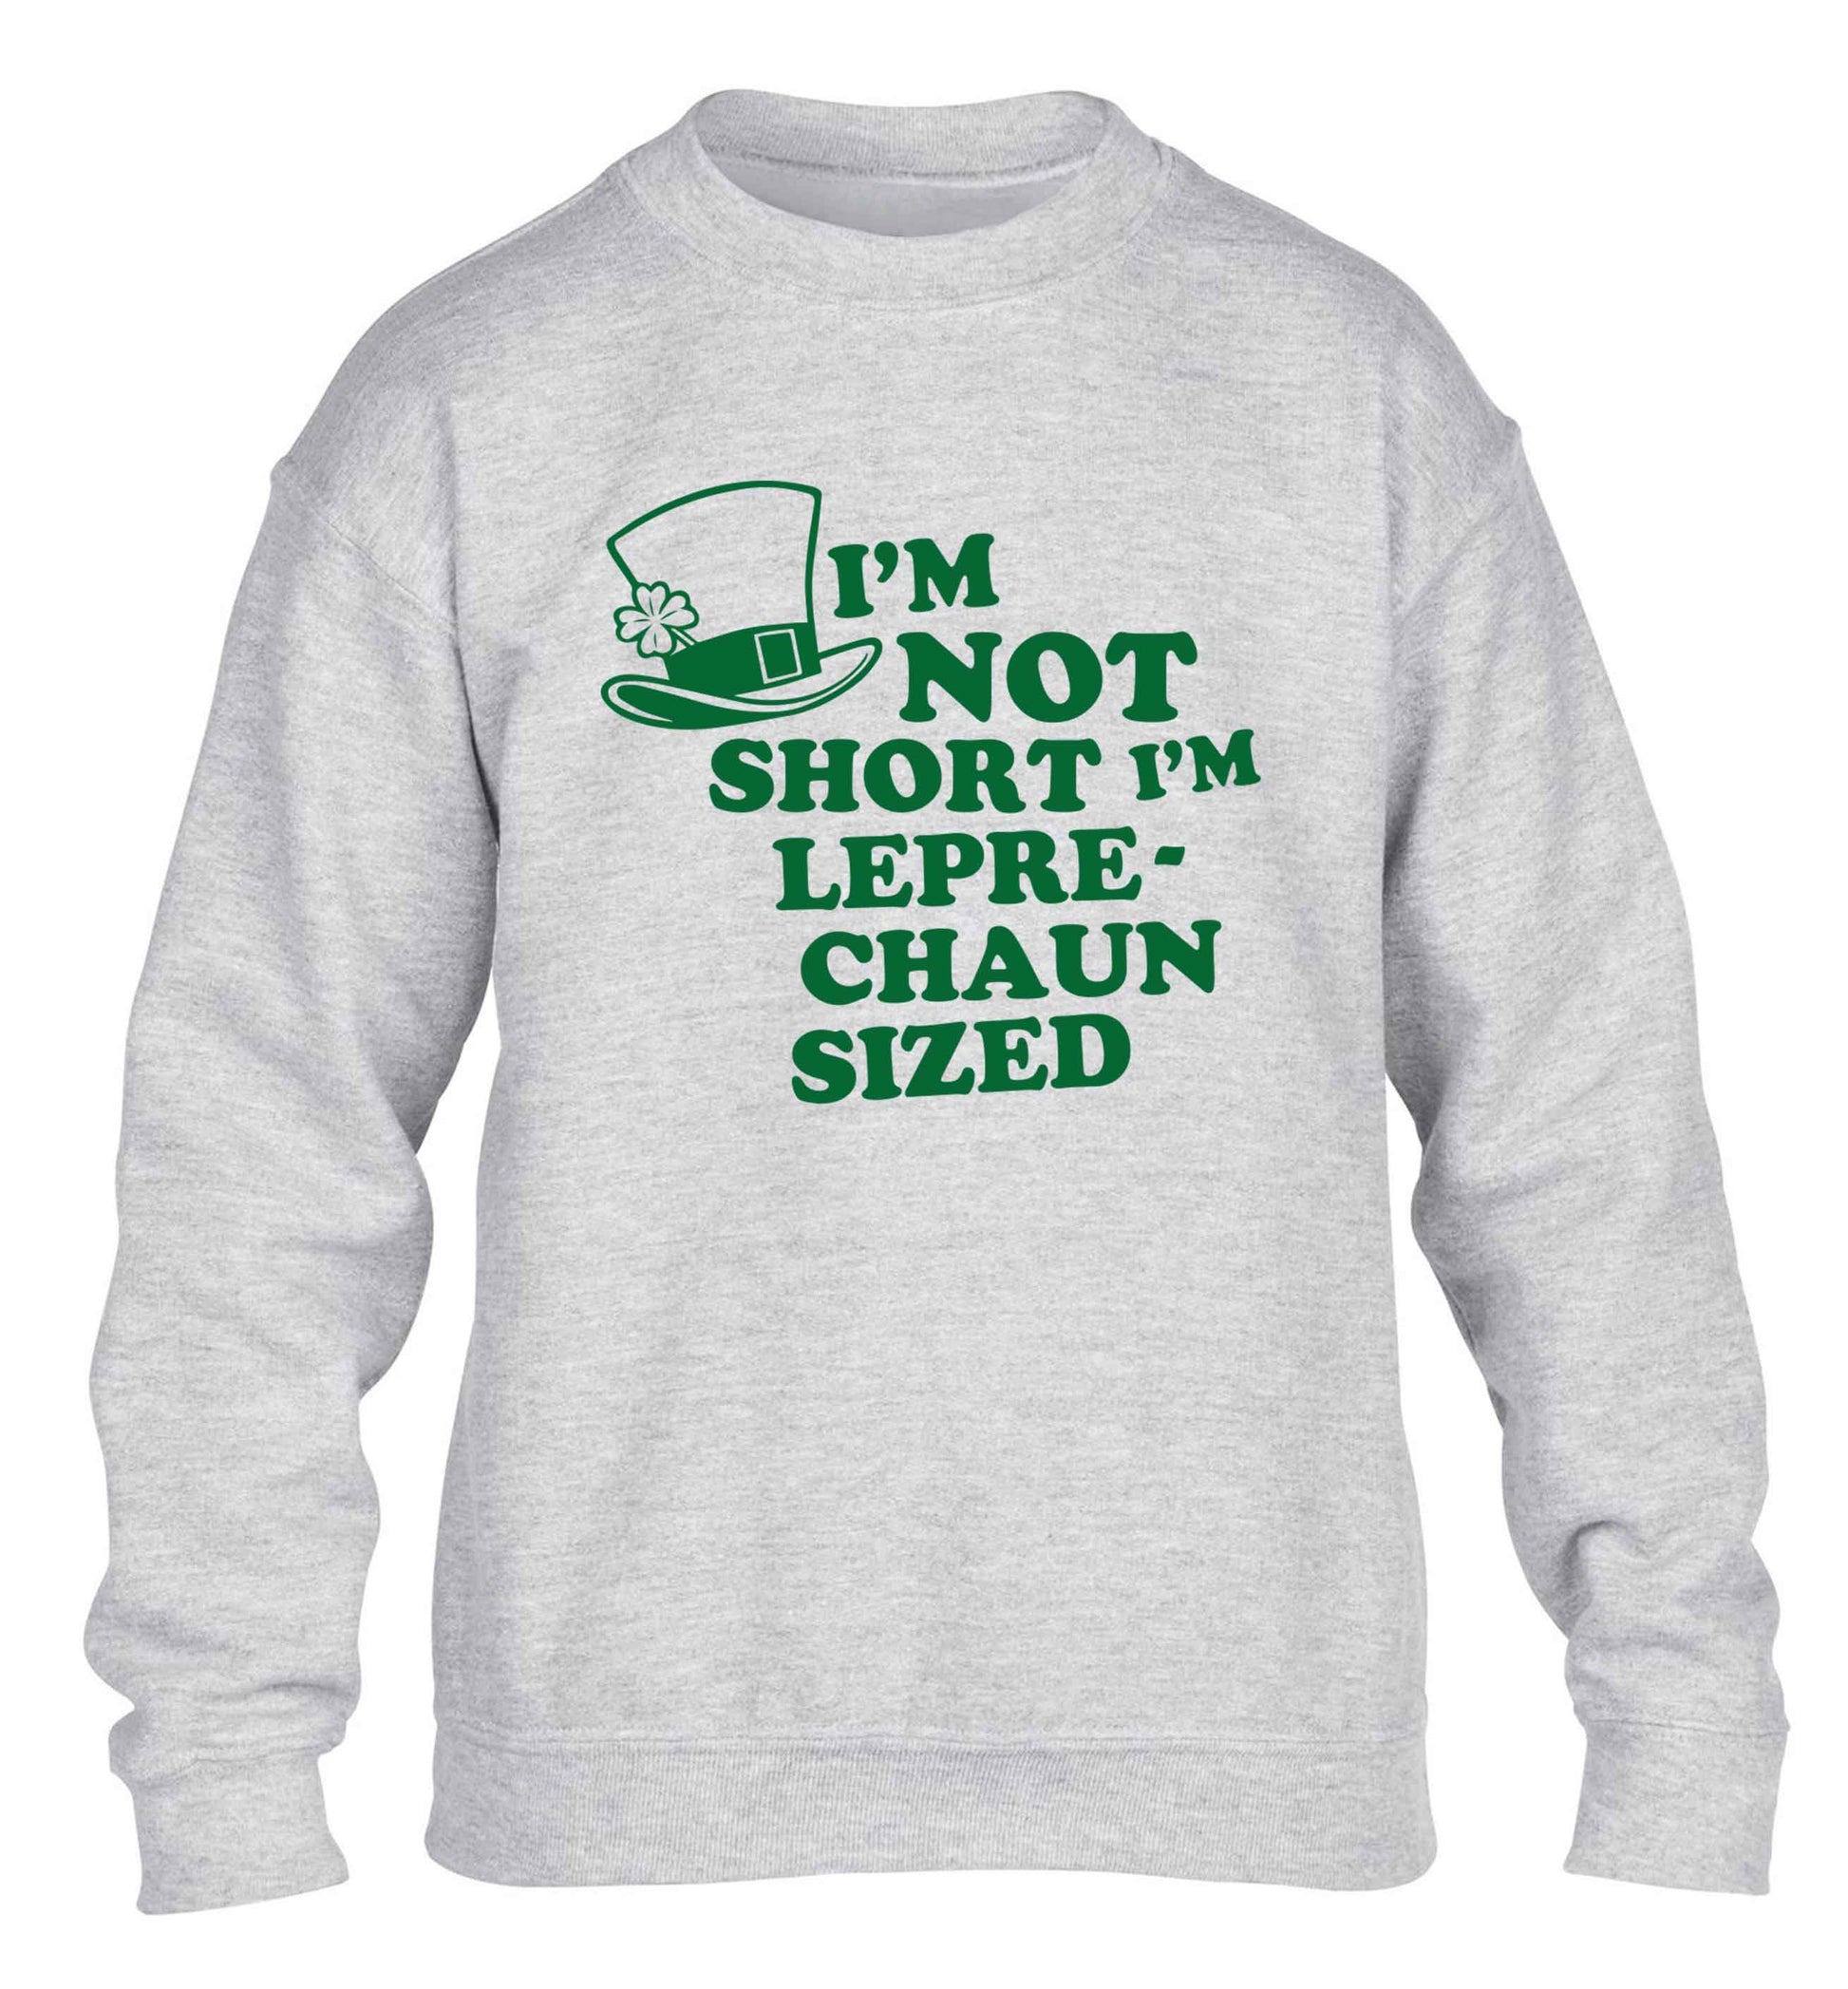 I'm not short I'm leprechaun sized children's grey sweater 12-13 Years